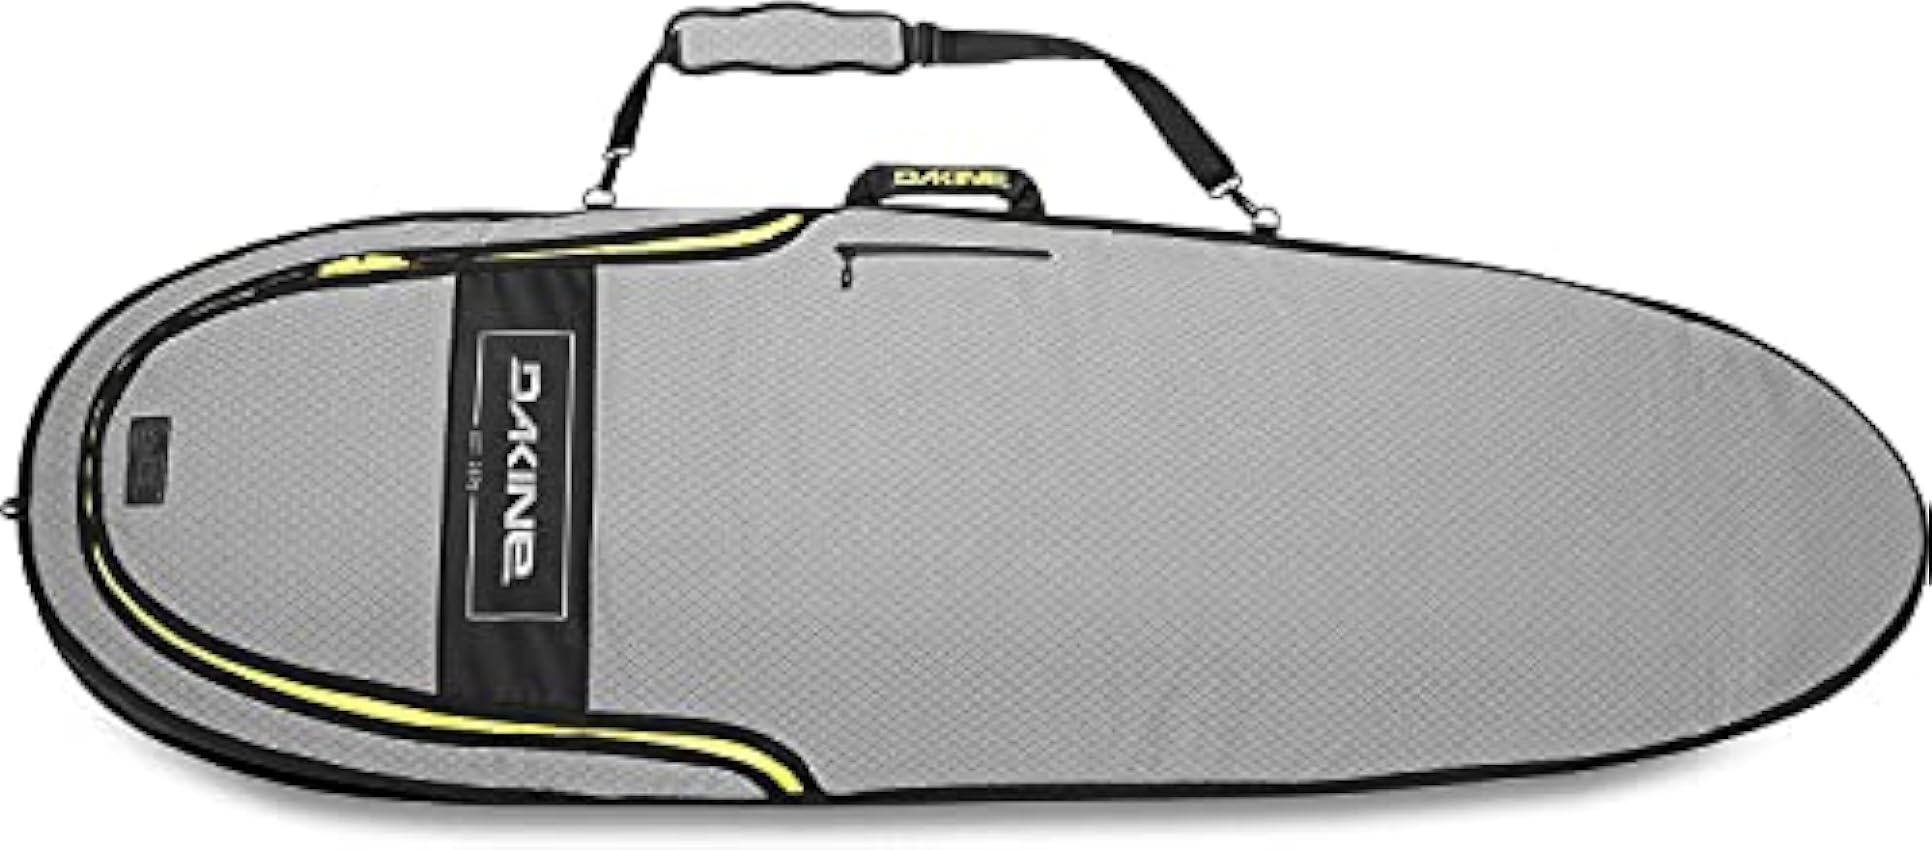 Dakine Mission Hybrid Surfboard Boardbag 2021 Carbon Sae8JiS6